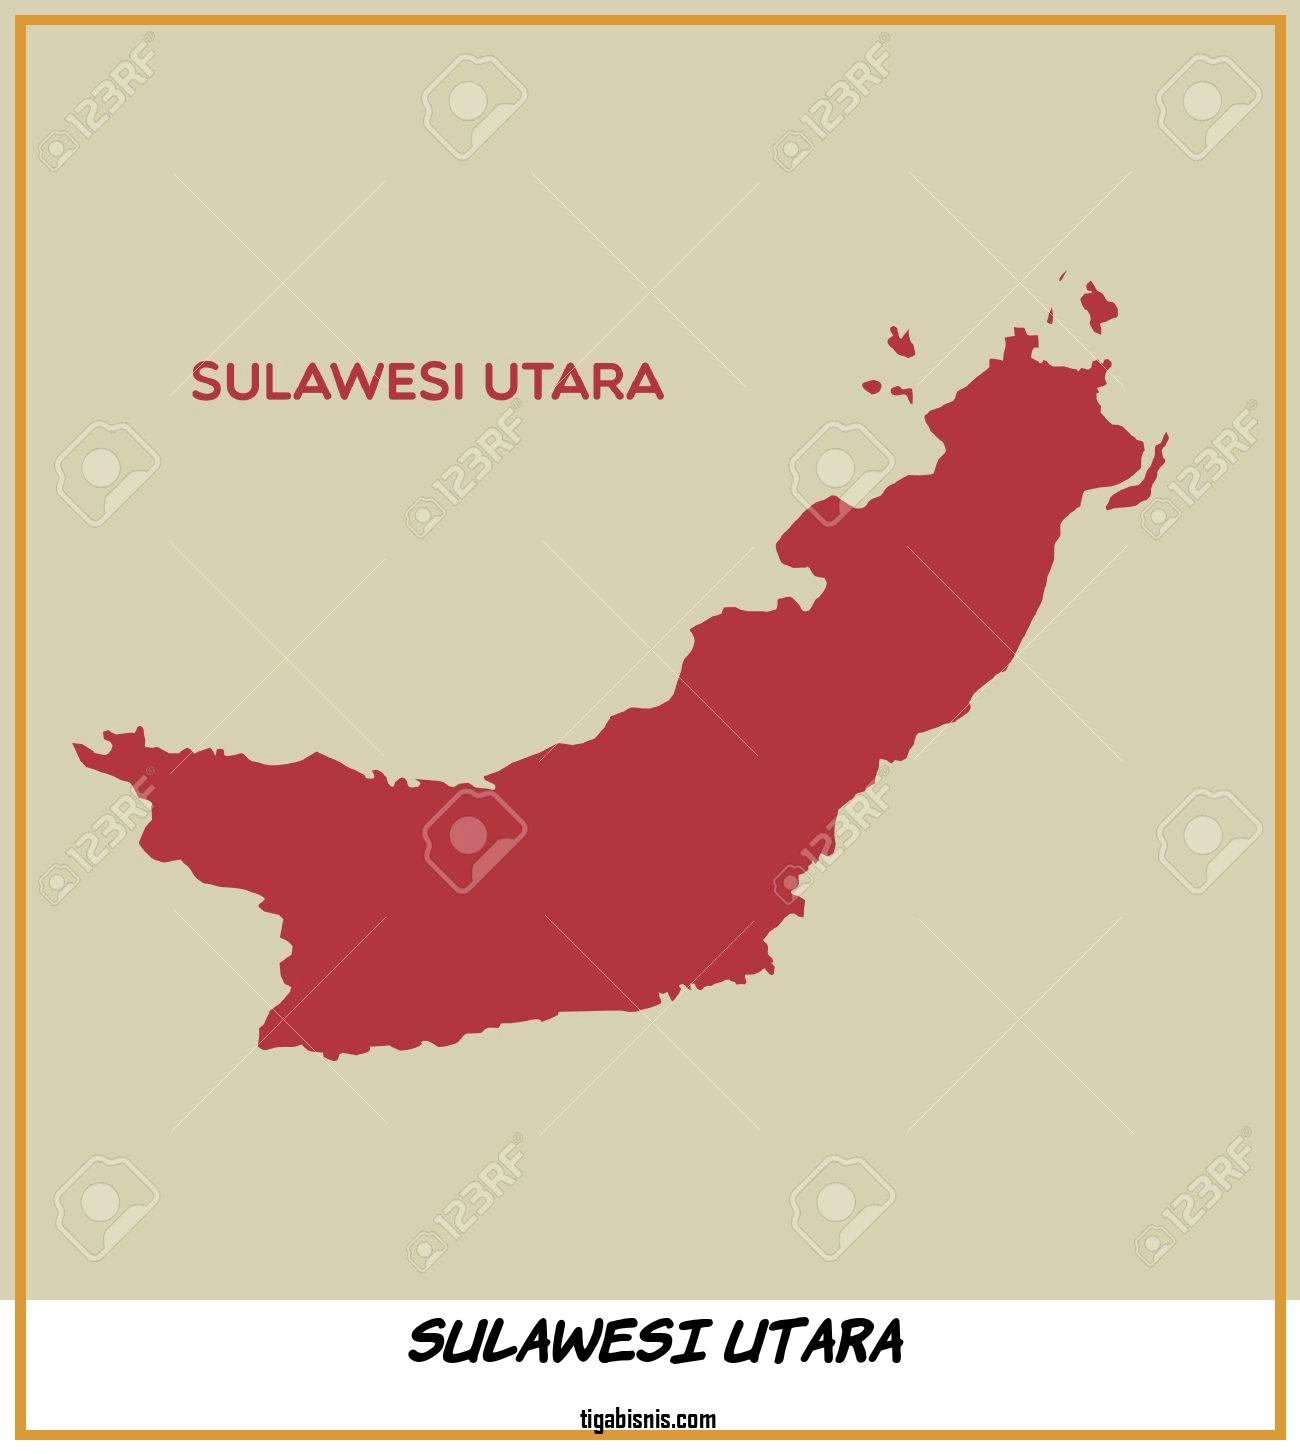 Lowongan Kerja Untuk Wilayah Sulawesi Utara . Sumber : Https://www.123rf.com/photo_52631736_map-of-sulawesi-utara.html